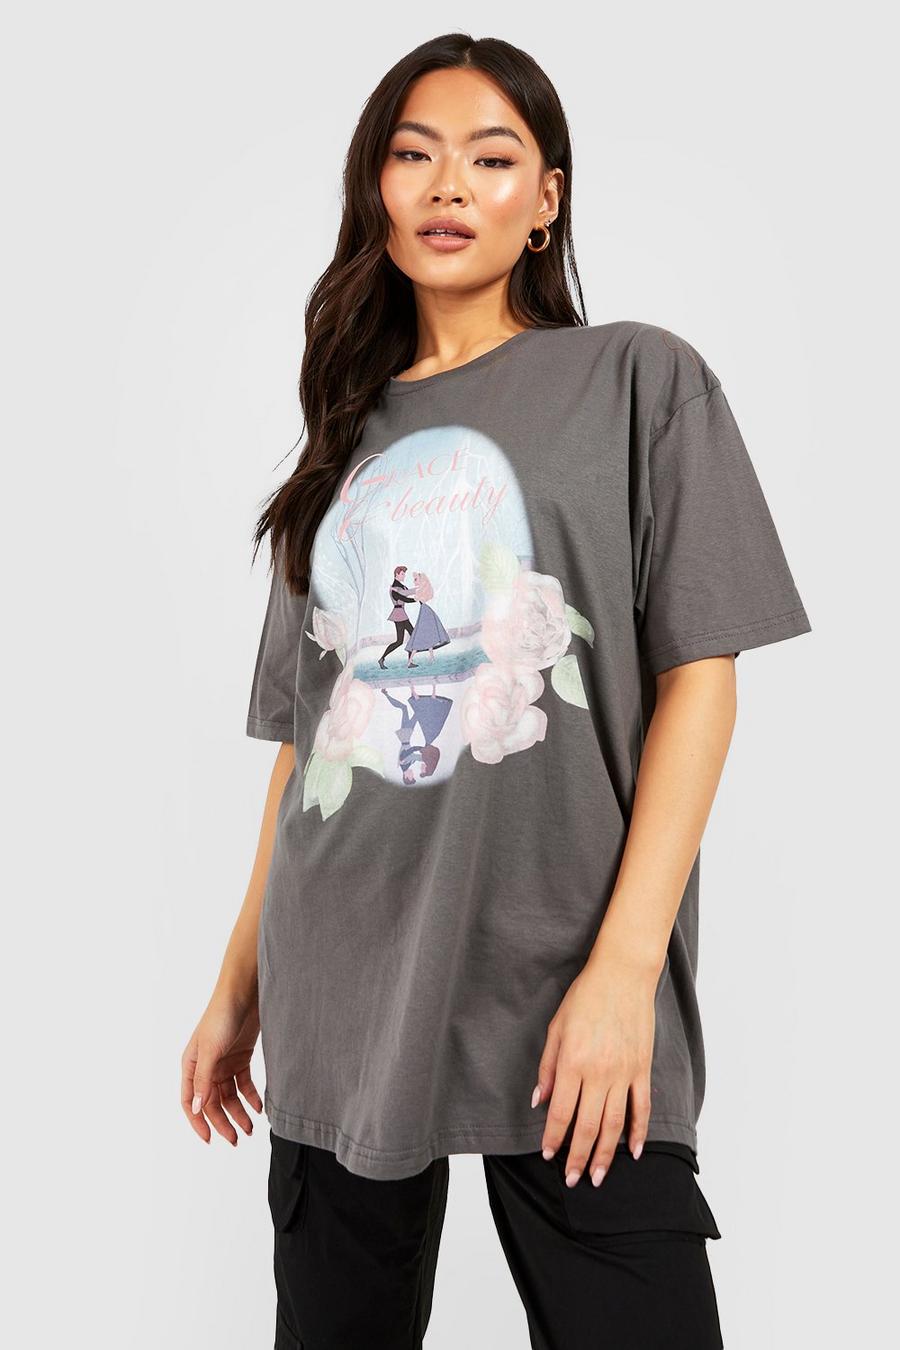 Charcoal gris Disney Princess Sleeping Beauty Graphic License T-shirt